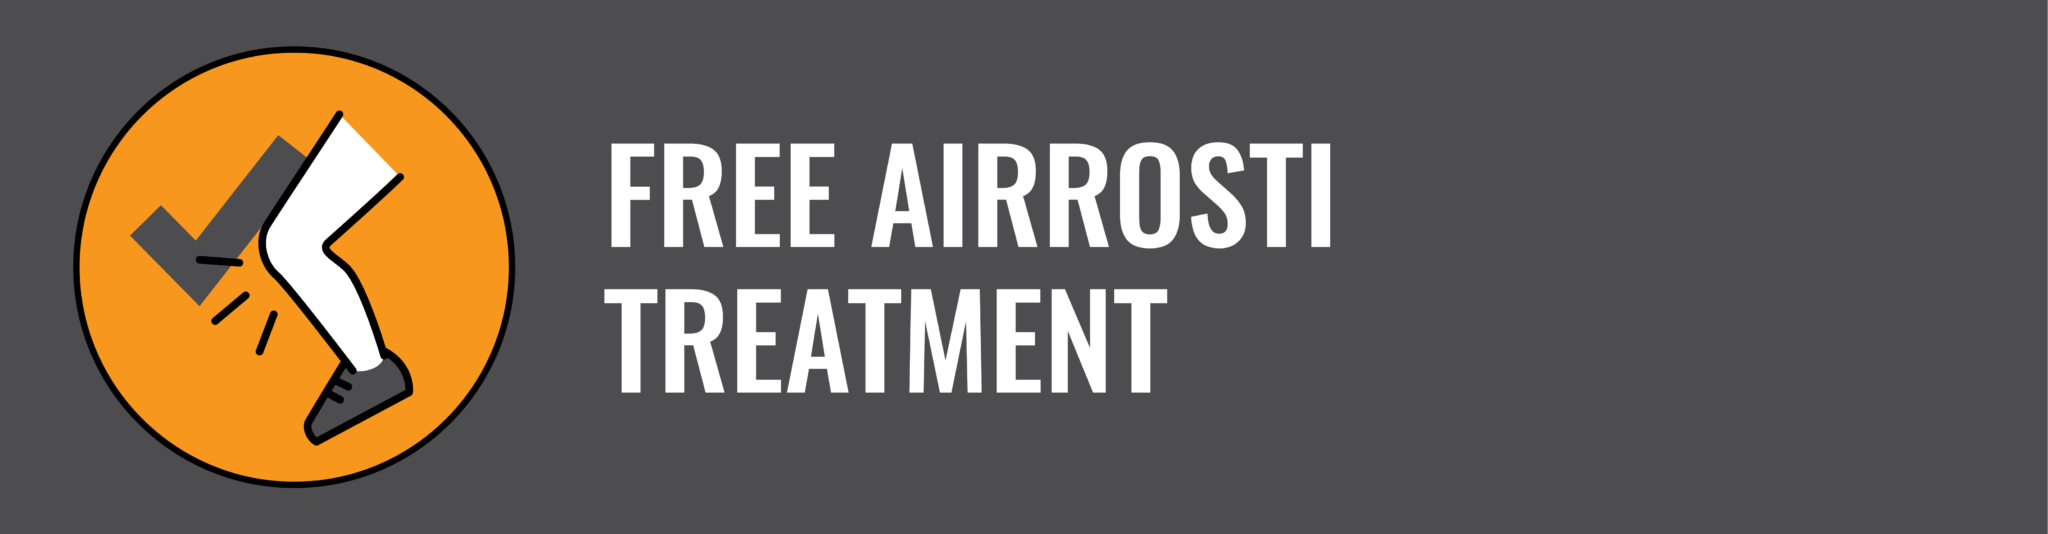 Free Airrosti Treatment